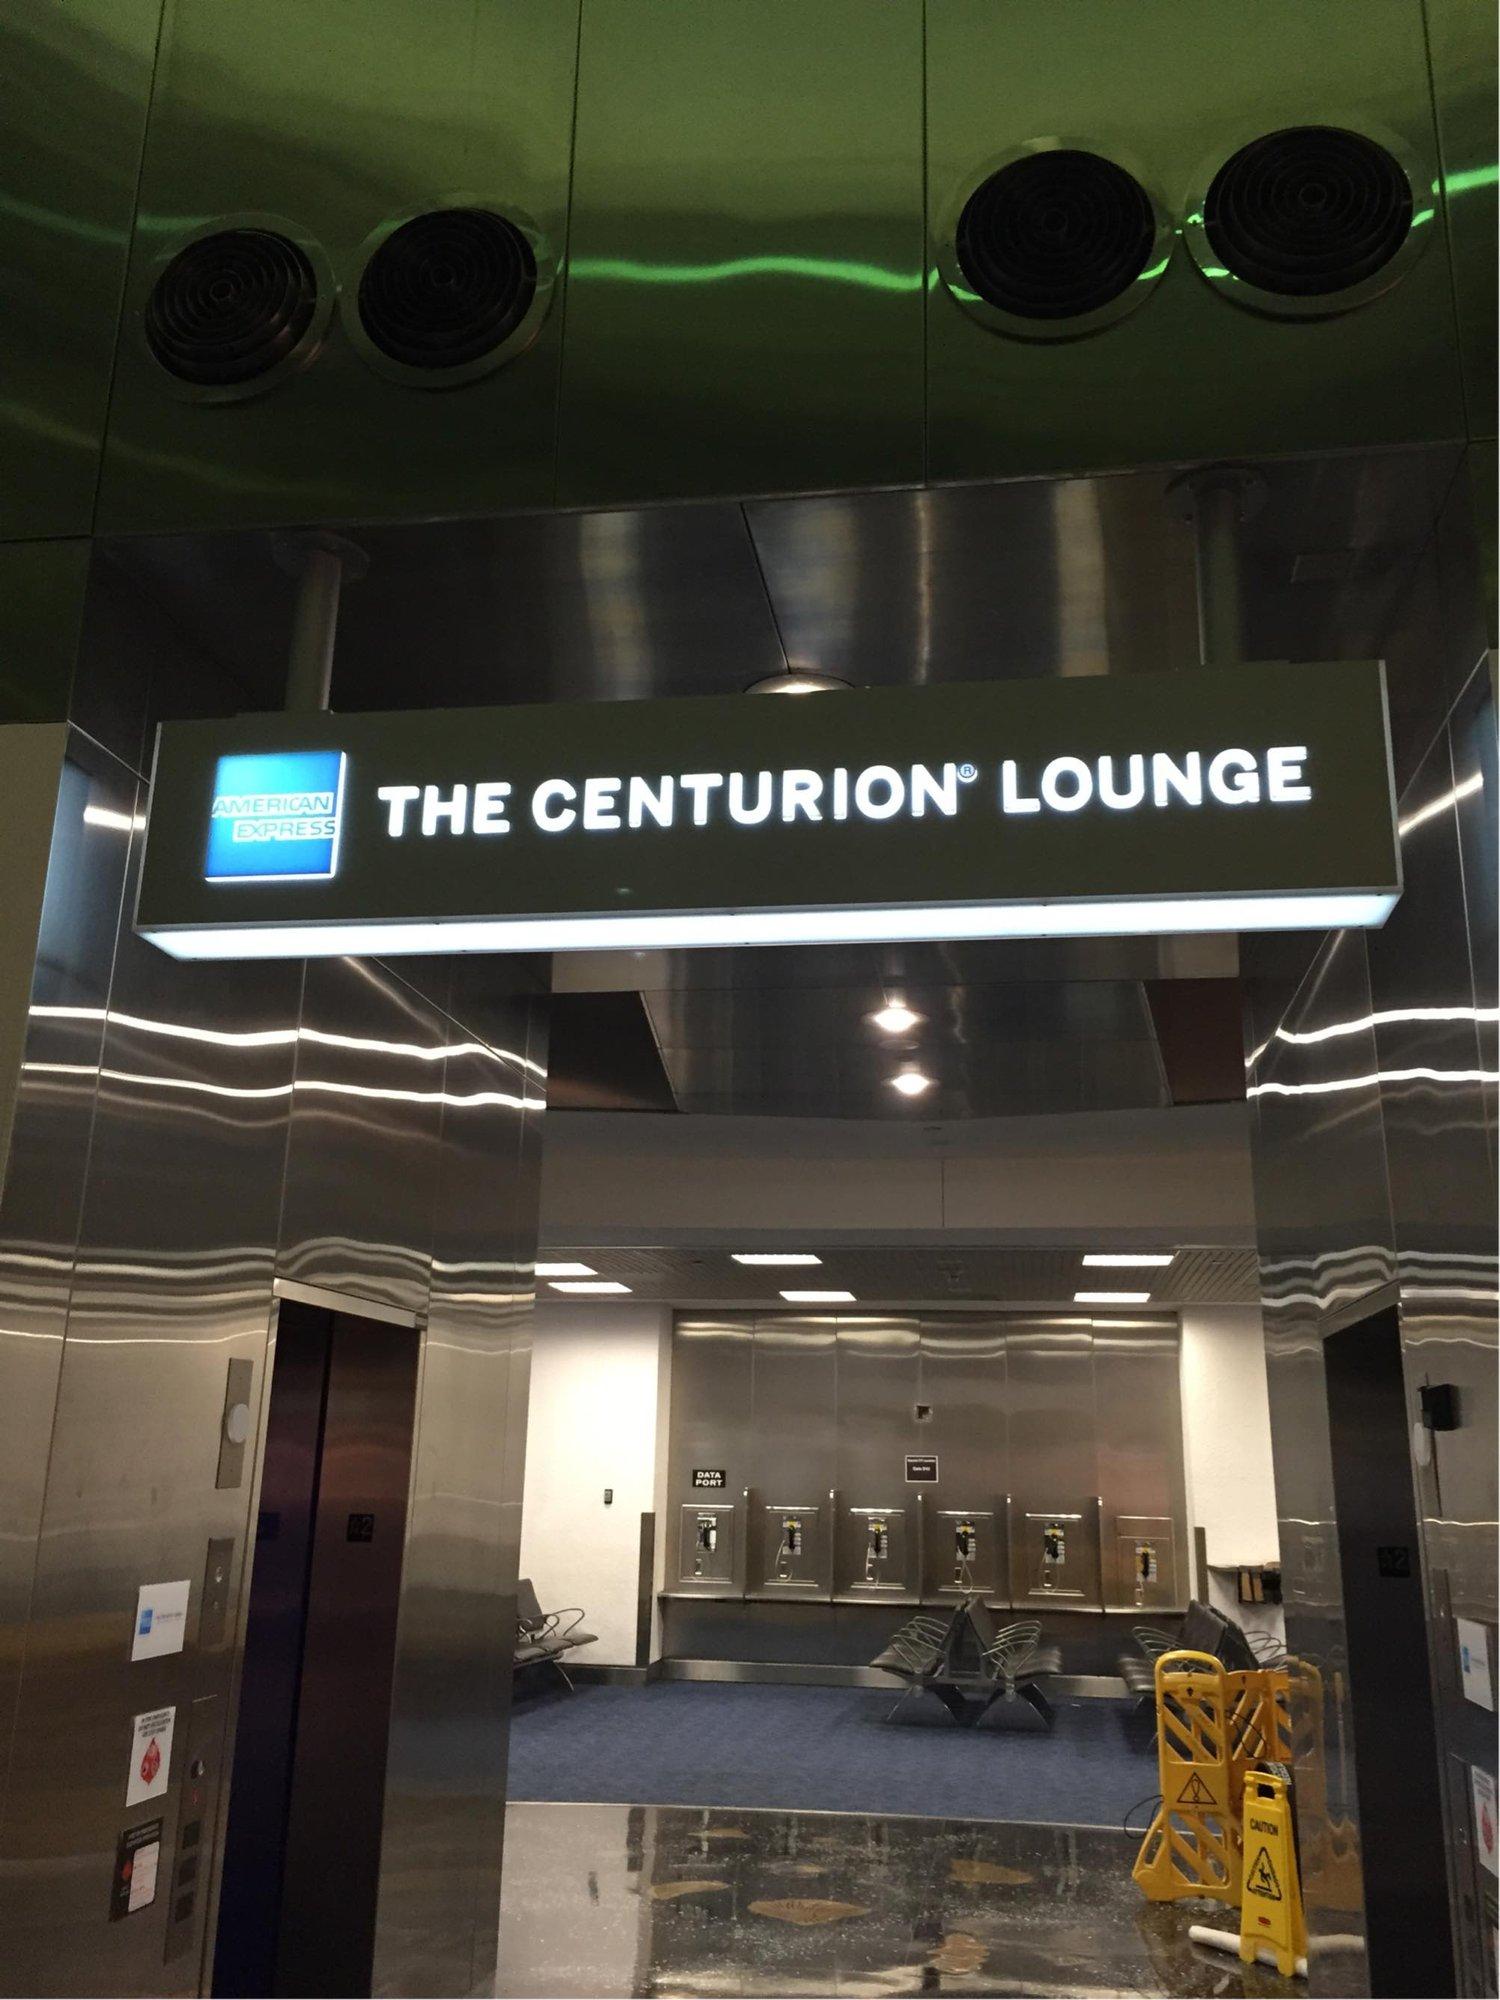 The Centurion Lounge image 34 of 76